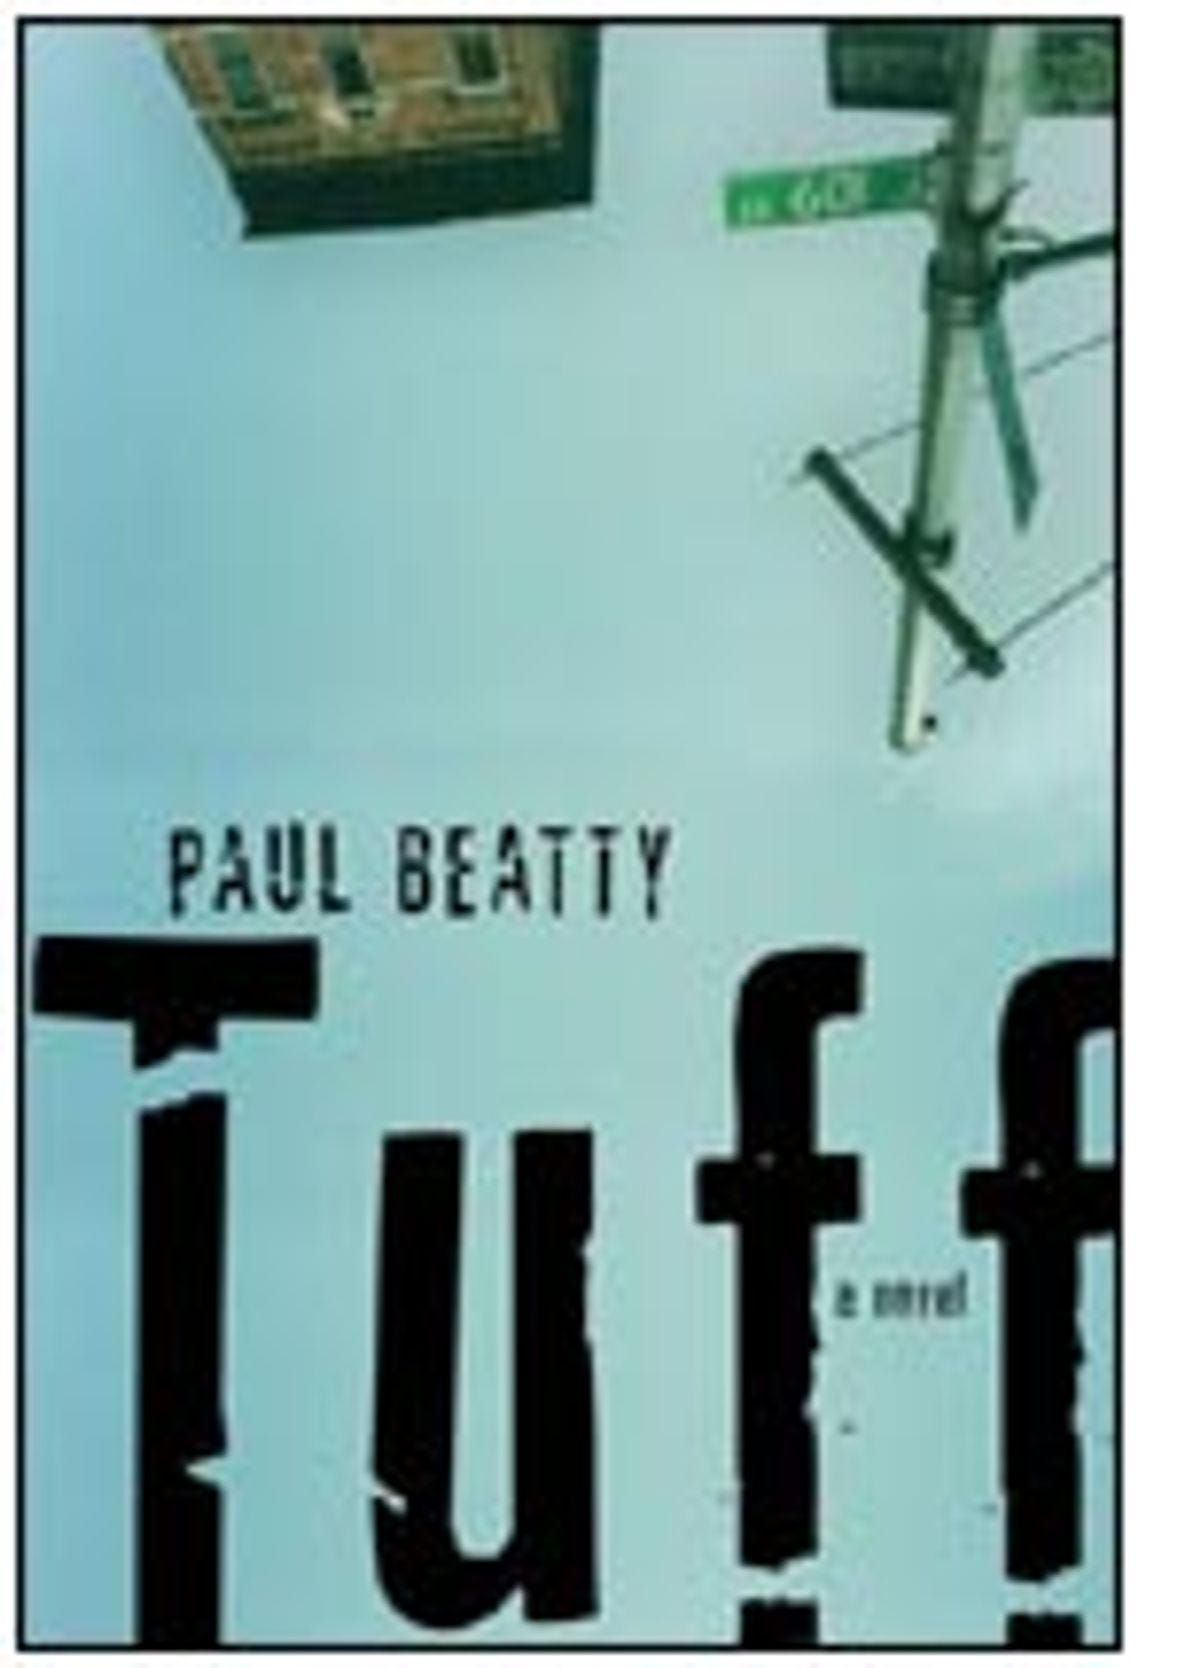 Tuff" by Paul Beatty | Salon.com